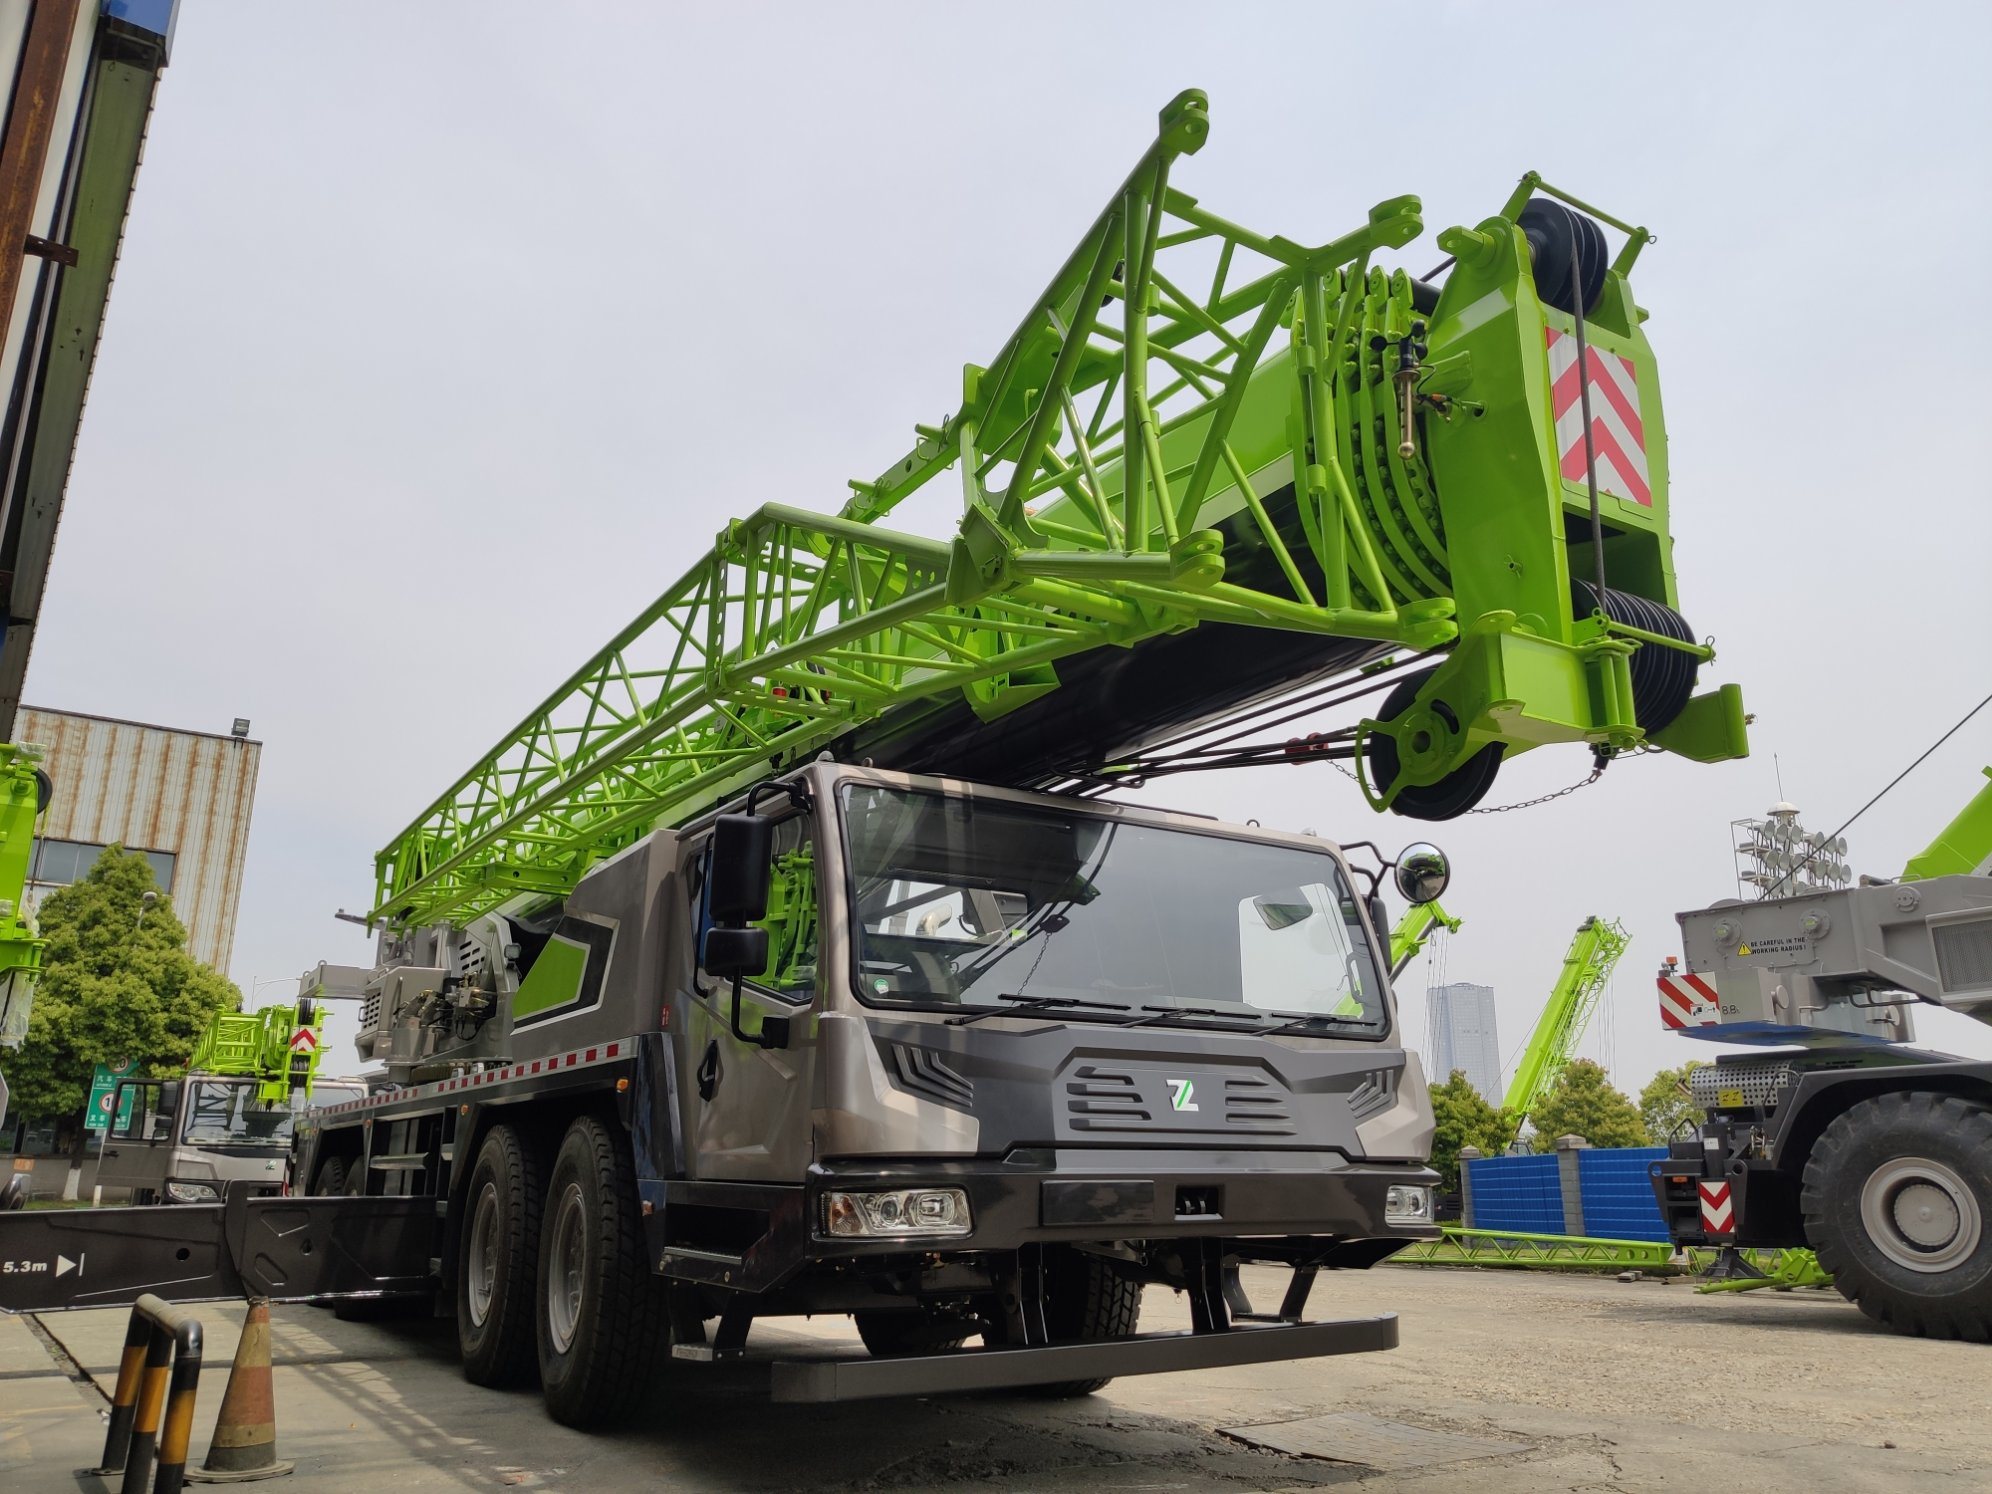 Zoomlion Truck Crane 110 Ton 4 Alex Truck Crane Ztc1100r653 Mobile Crane for Hot Sale Brazil